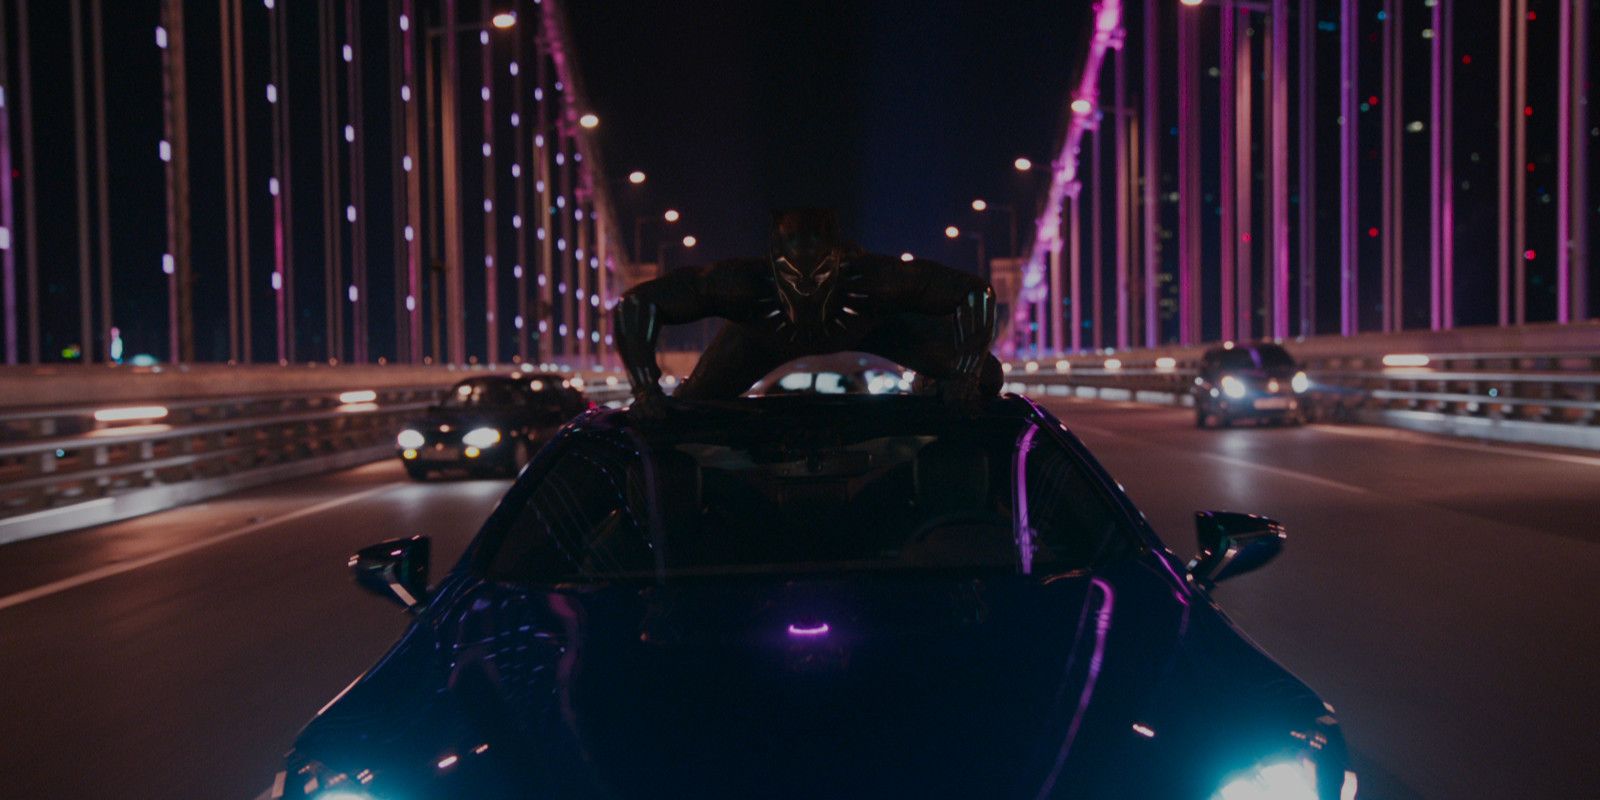 Black Panther Trailer #2 Breakdown: All Hail the King